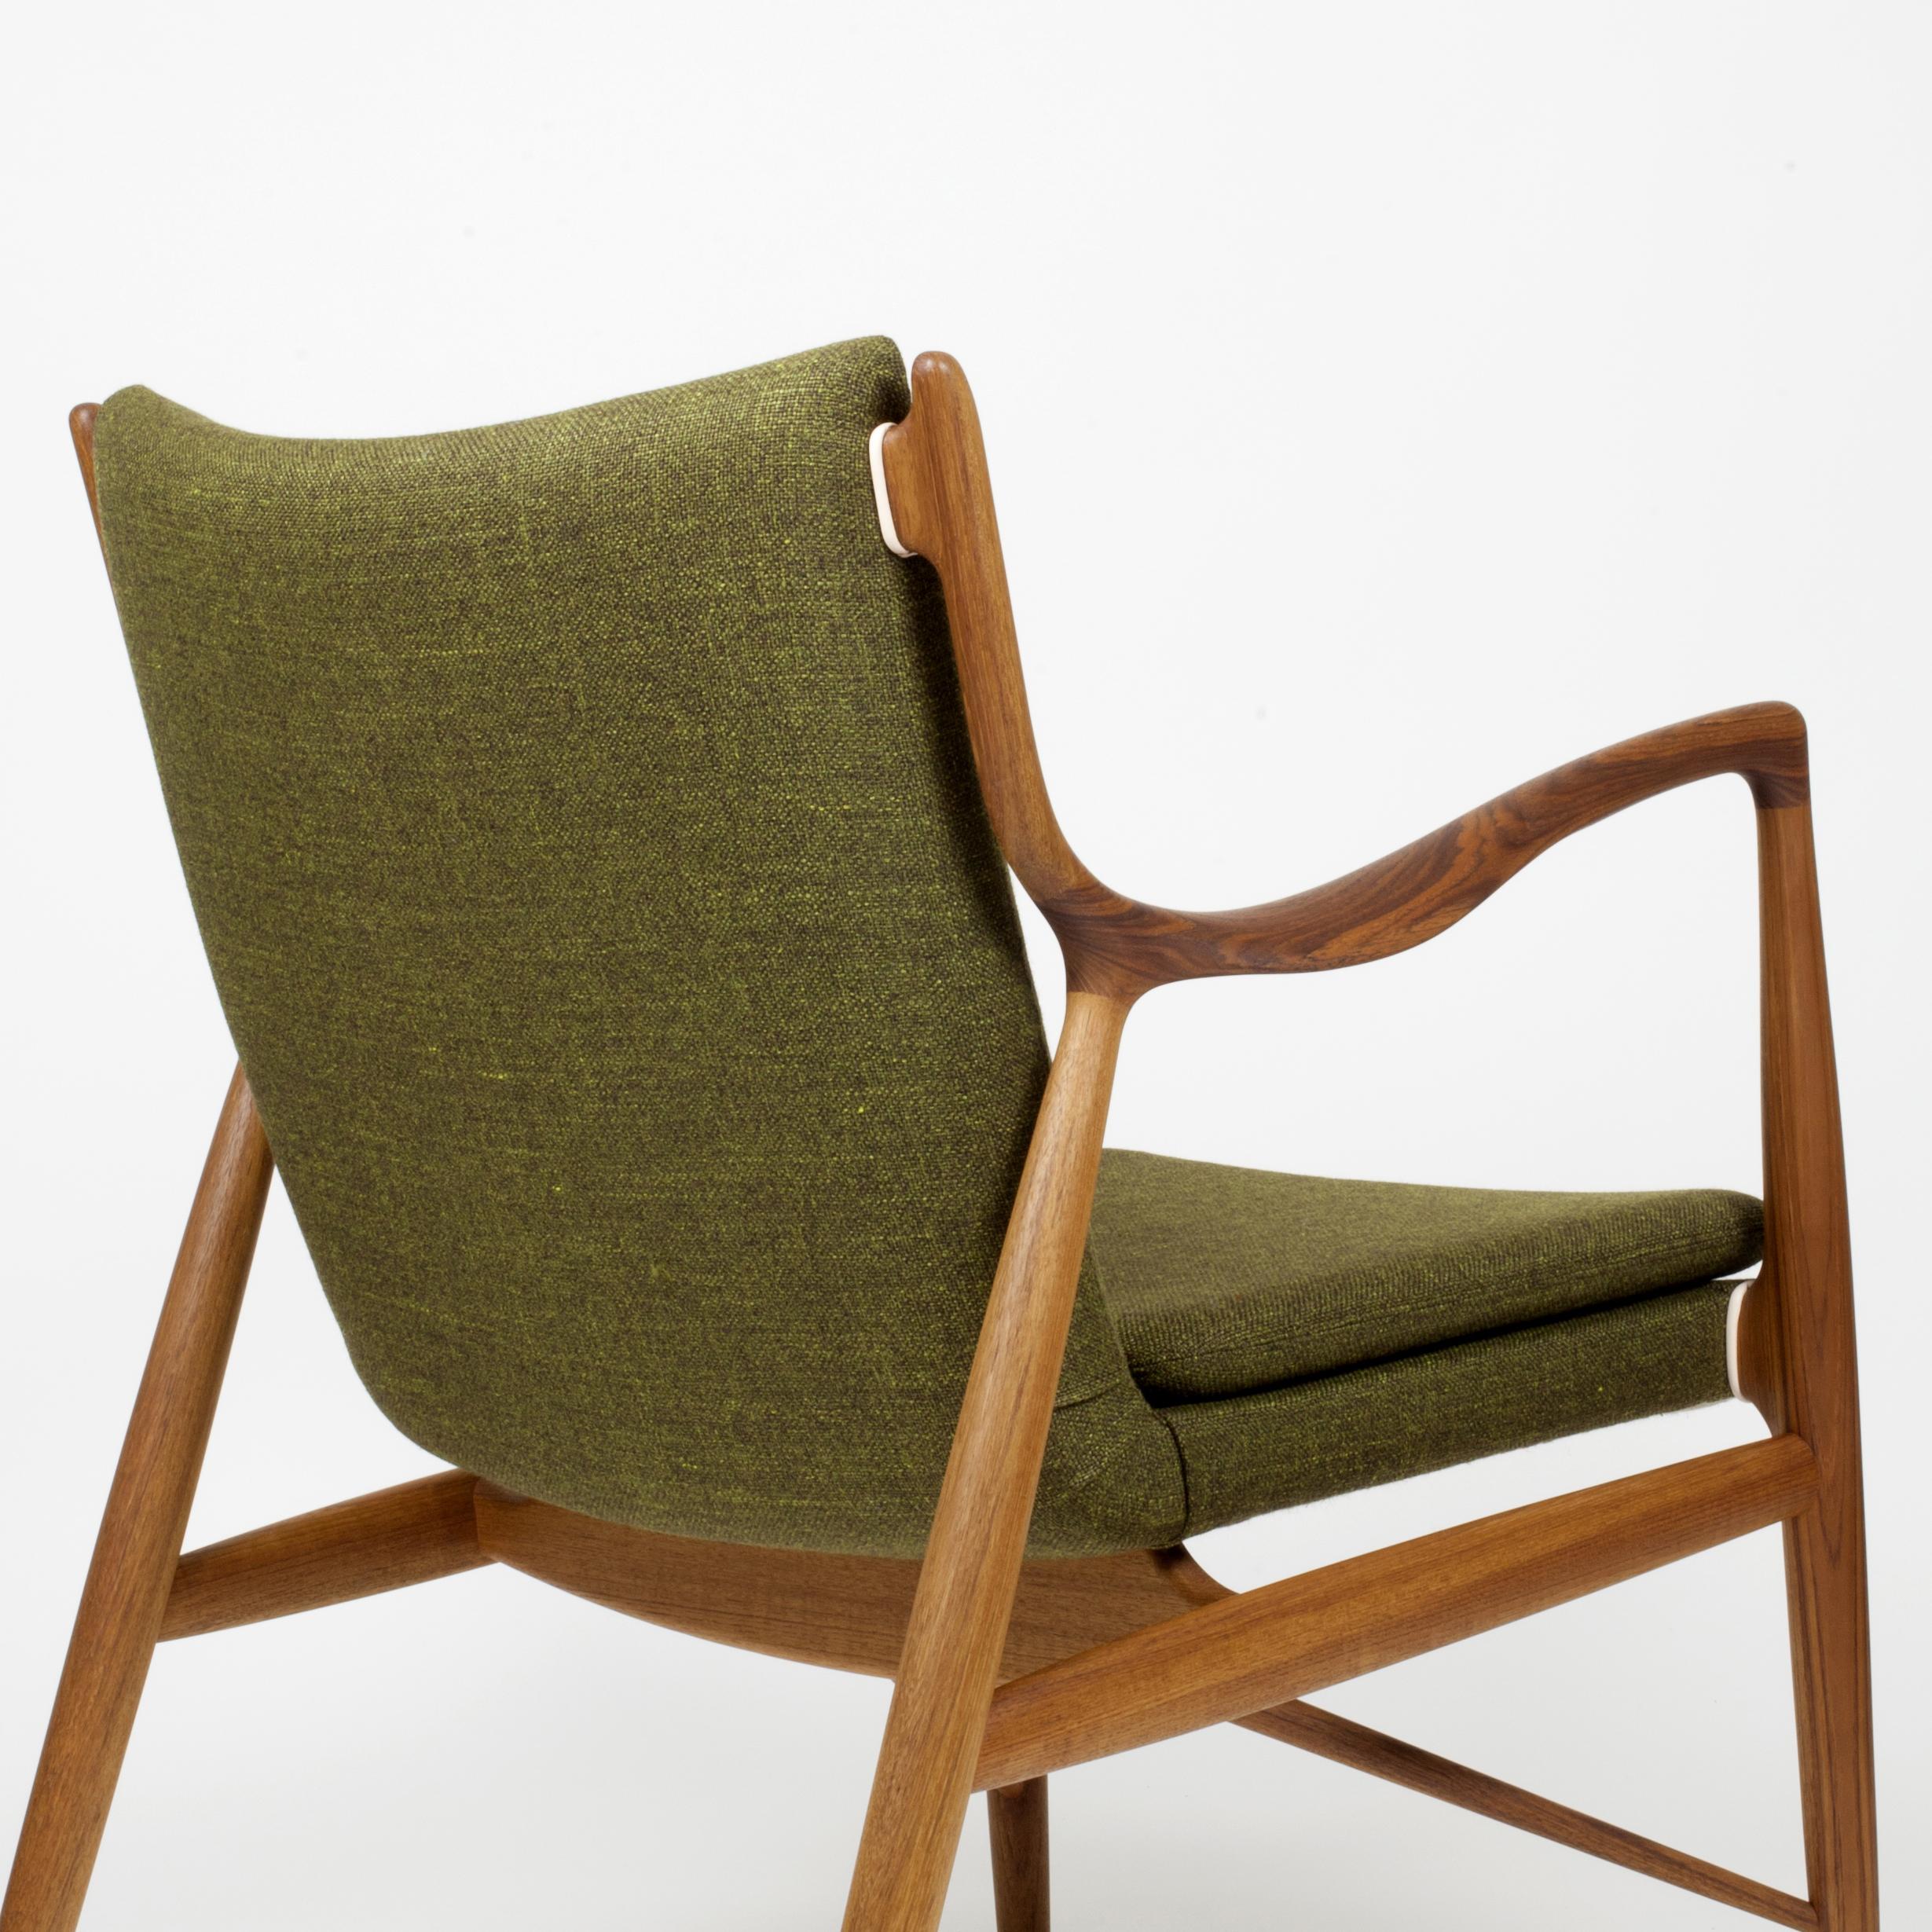 Finn Juhl 45 Chair, Wood and Fabric 1